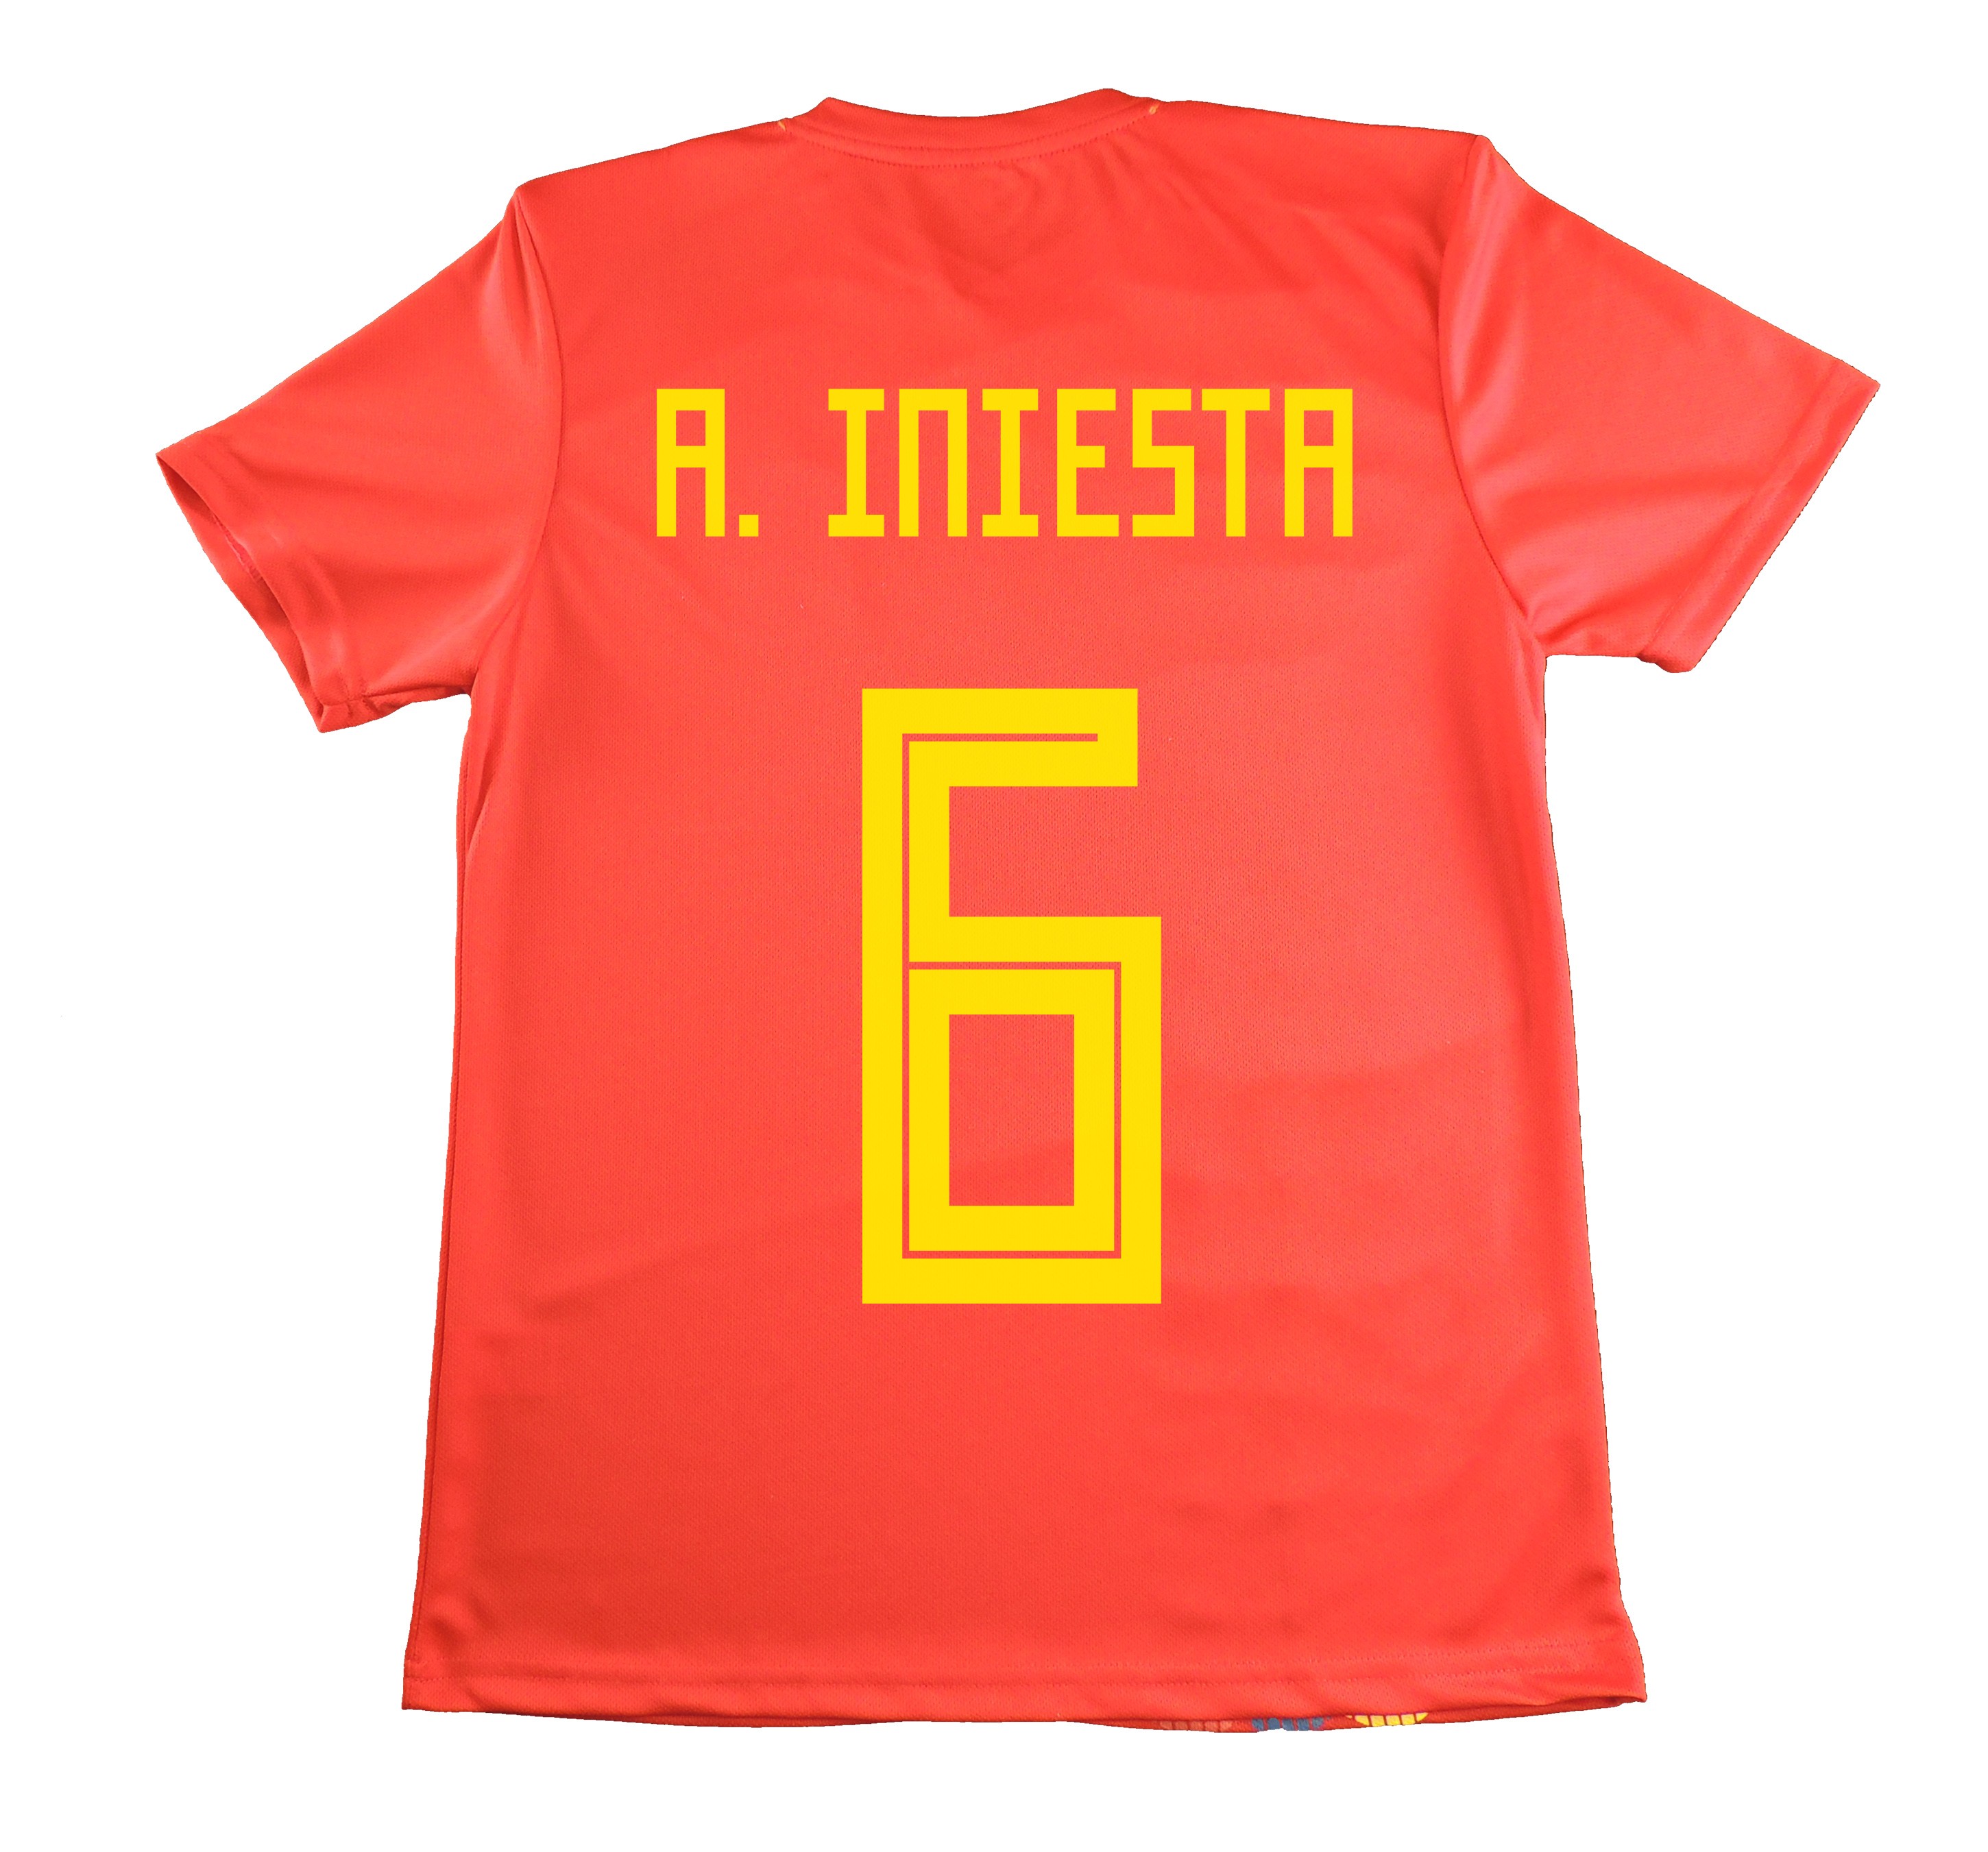 Camiseta Iniesta Réplica Oficial Selección de España. Producto Oficial Licenciado Mundial 2018